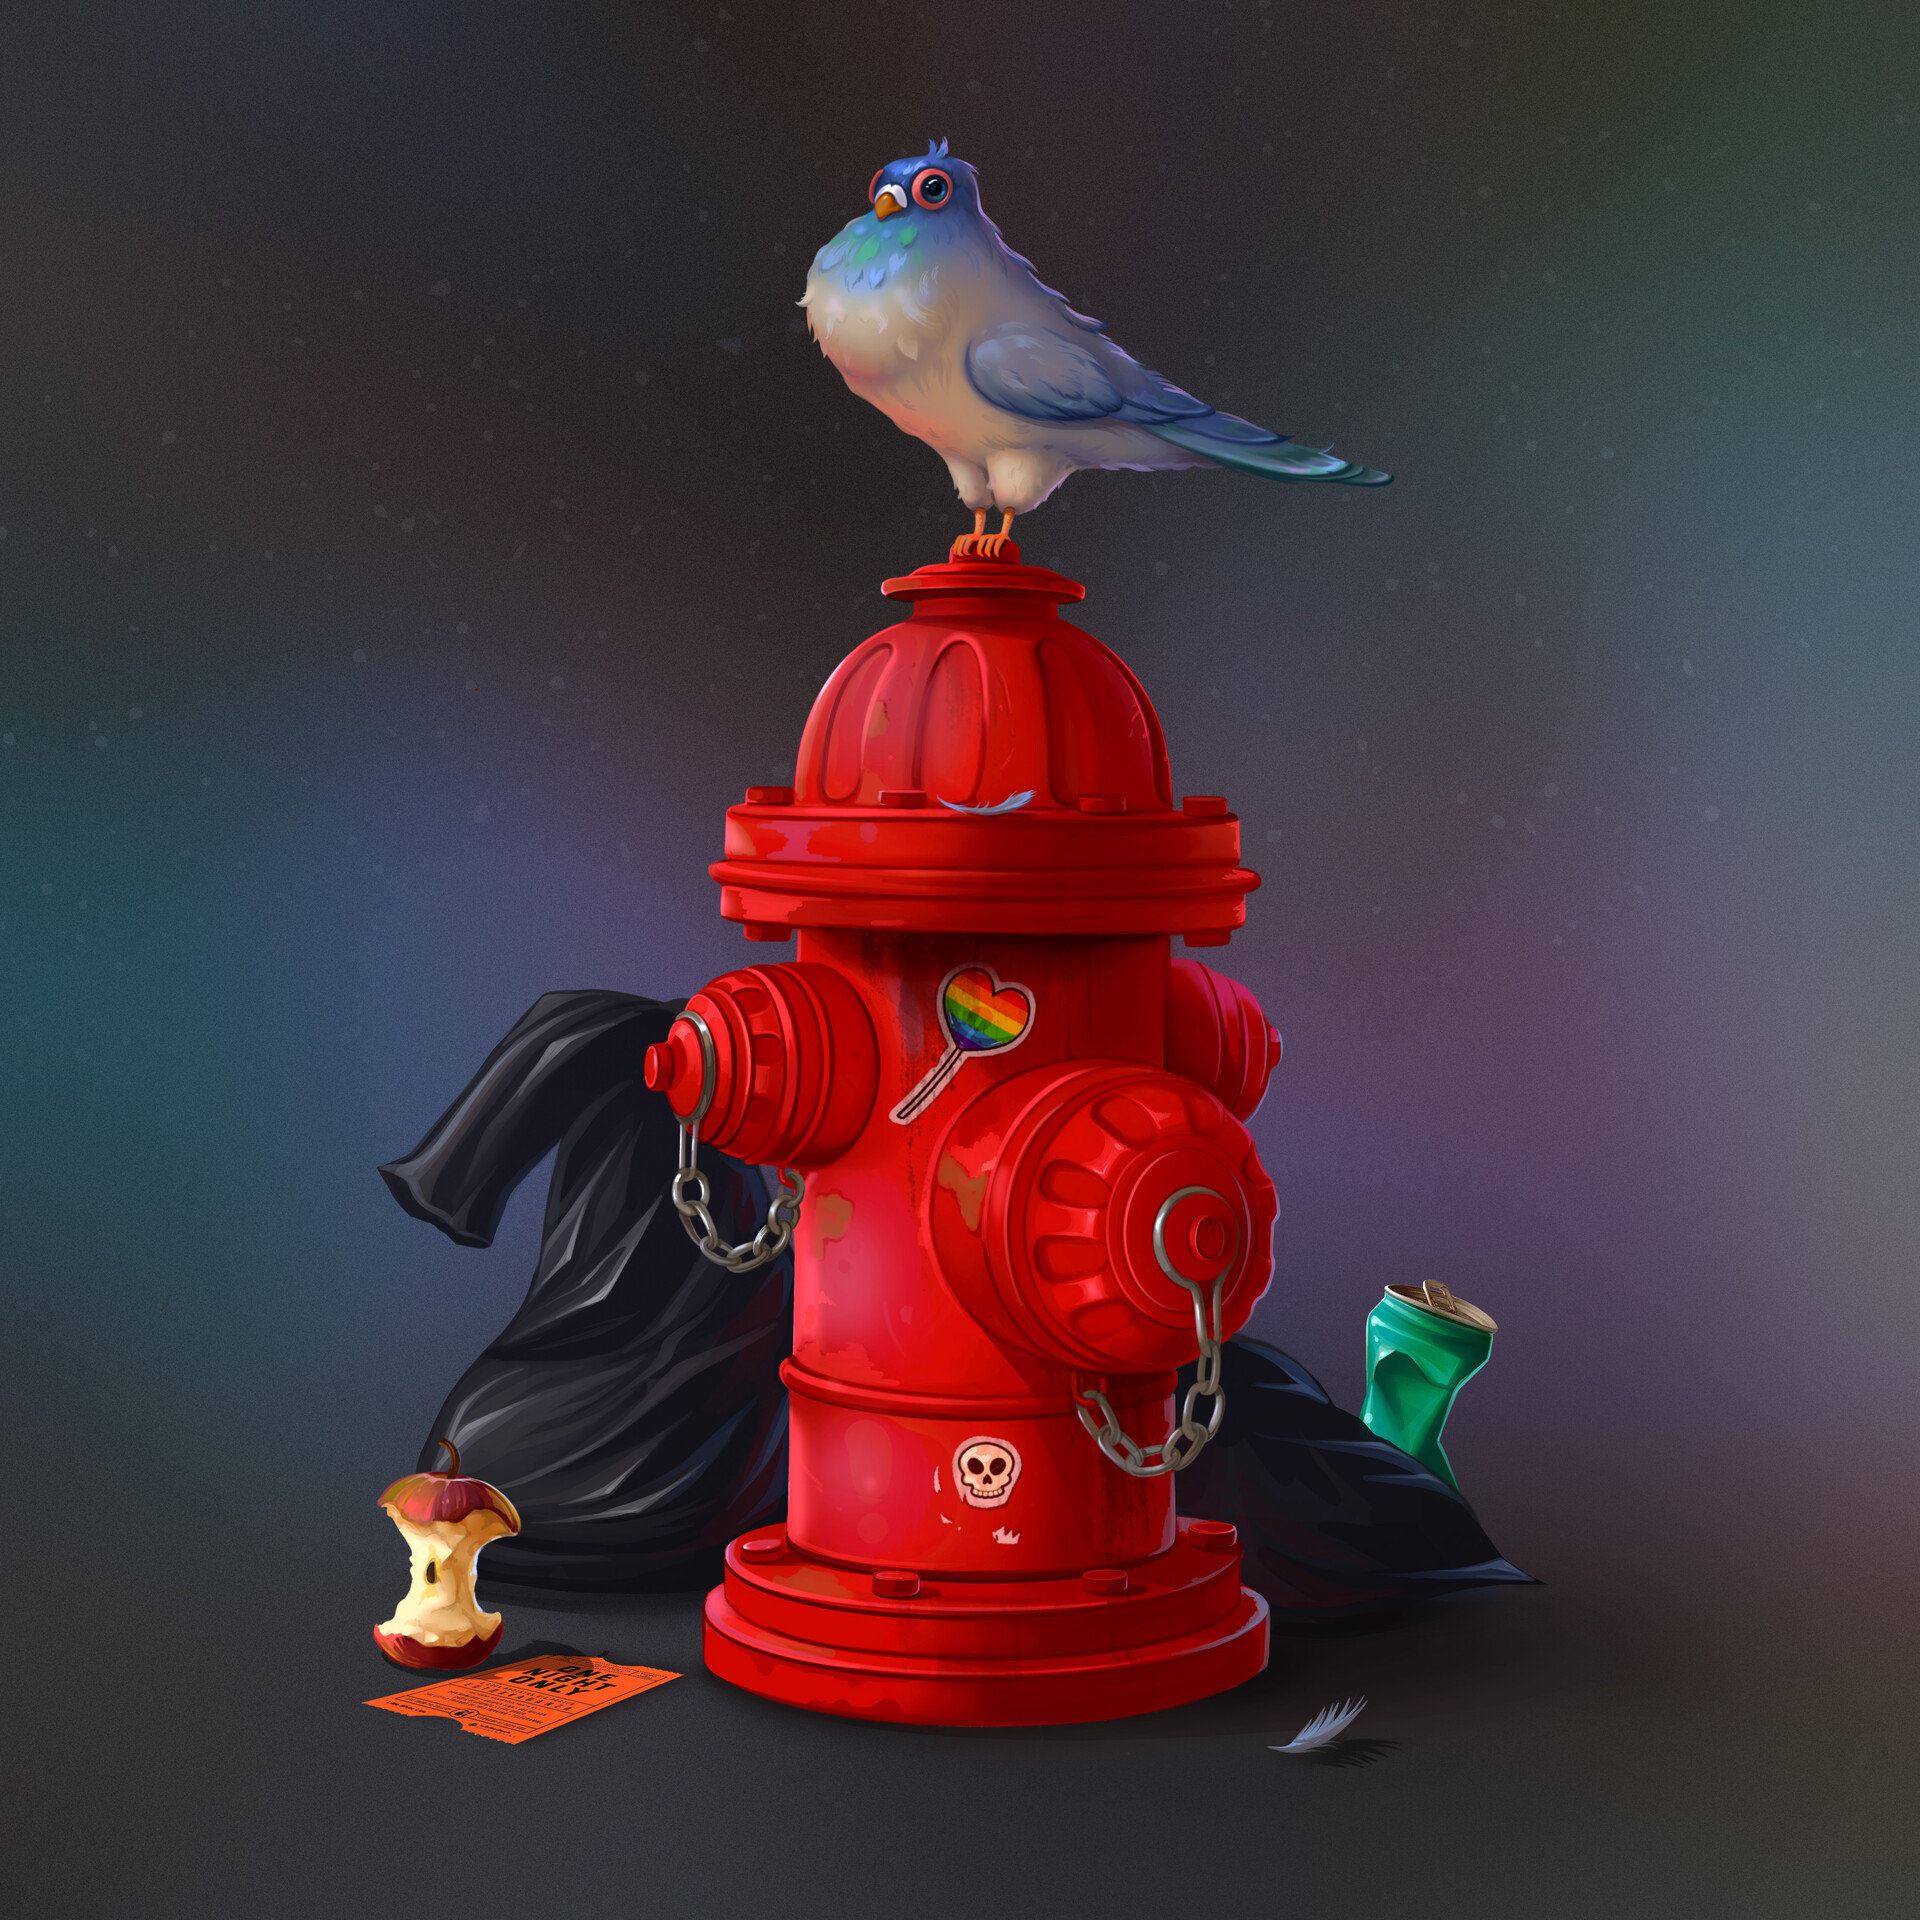 Fire Hydrant by Yana Potapchik at ArtStation